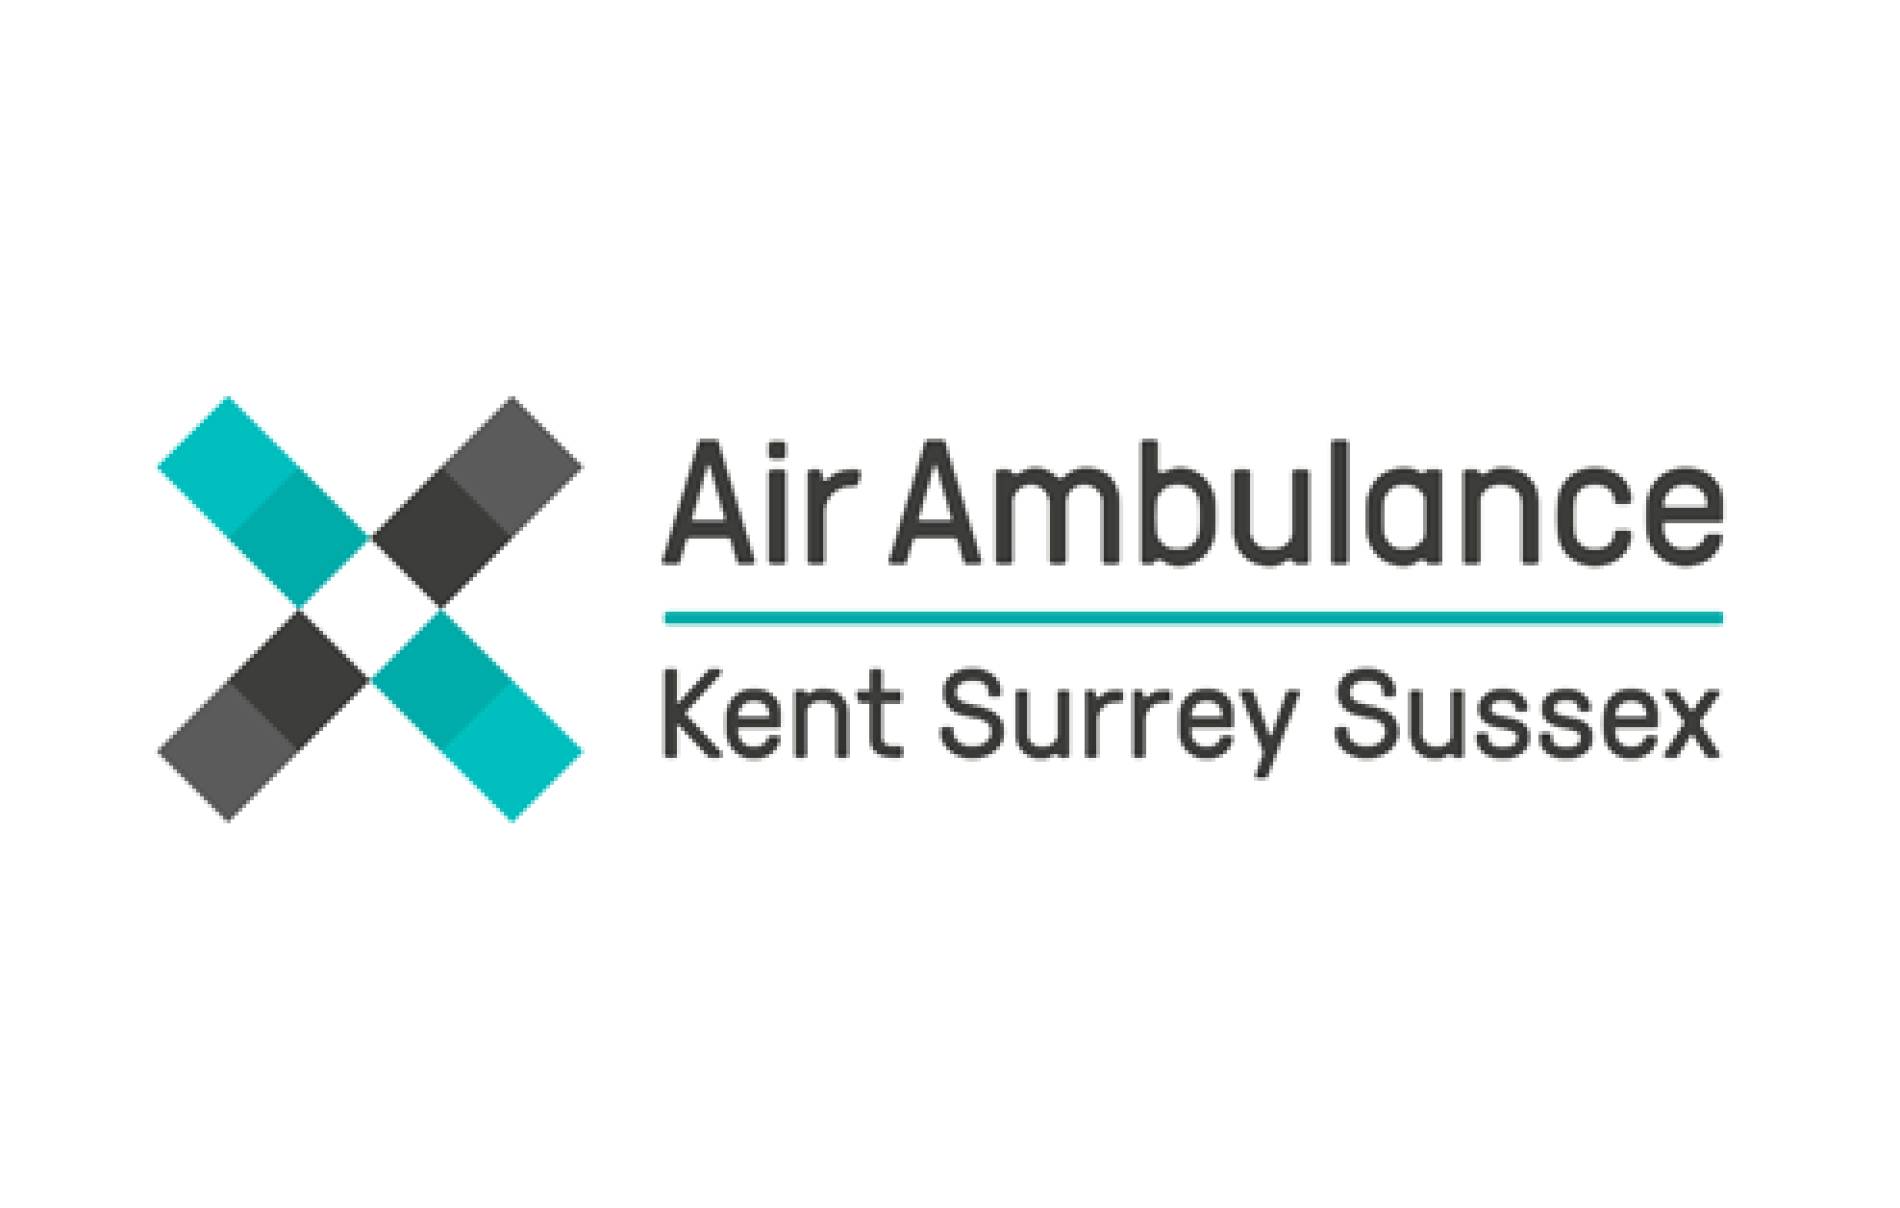 Air Ambulance KSS (Kent Surrey Sussex)